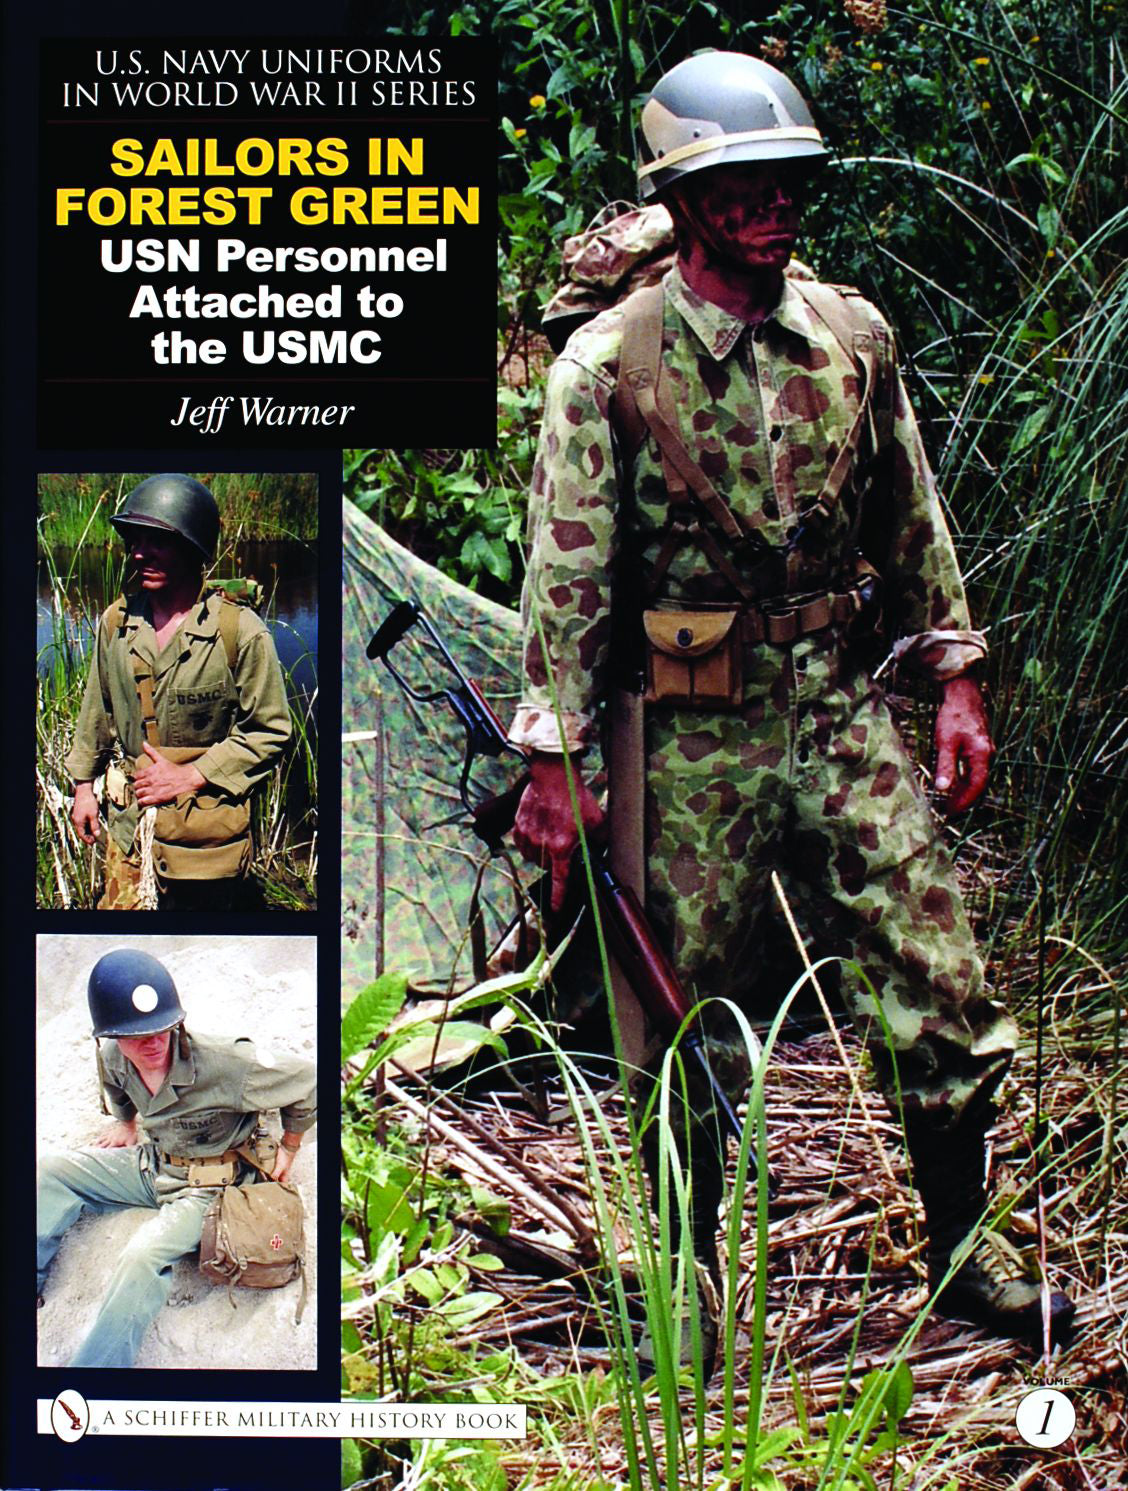 U.S. Navy Uniforms in World War II Series: Sailors in Forest Green Vol. 1